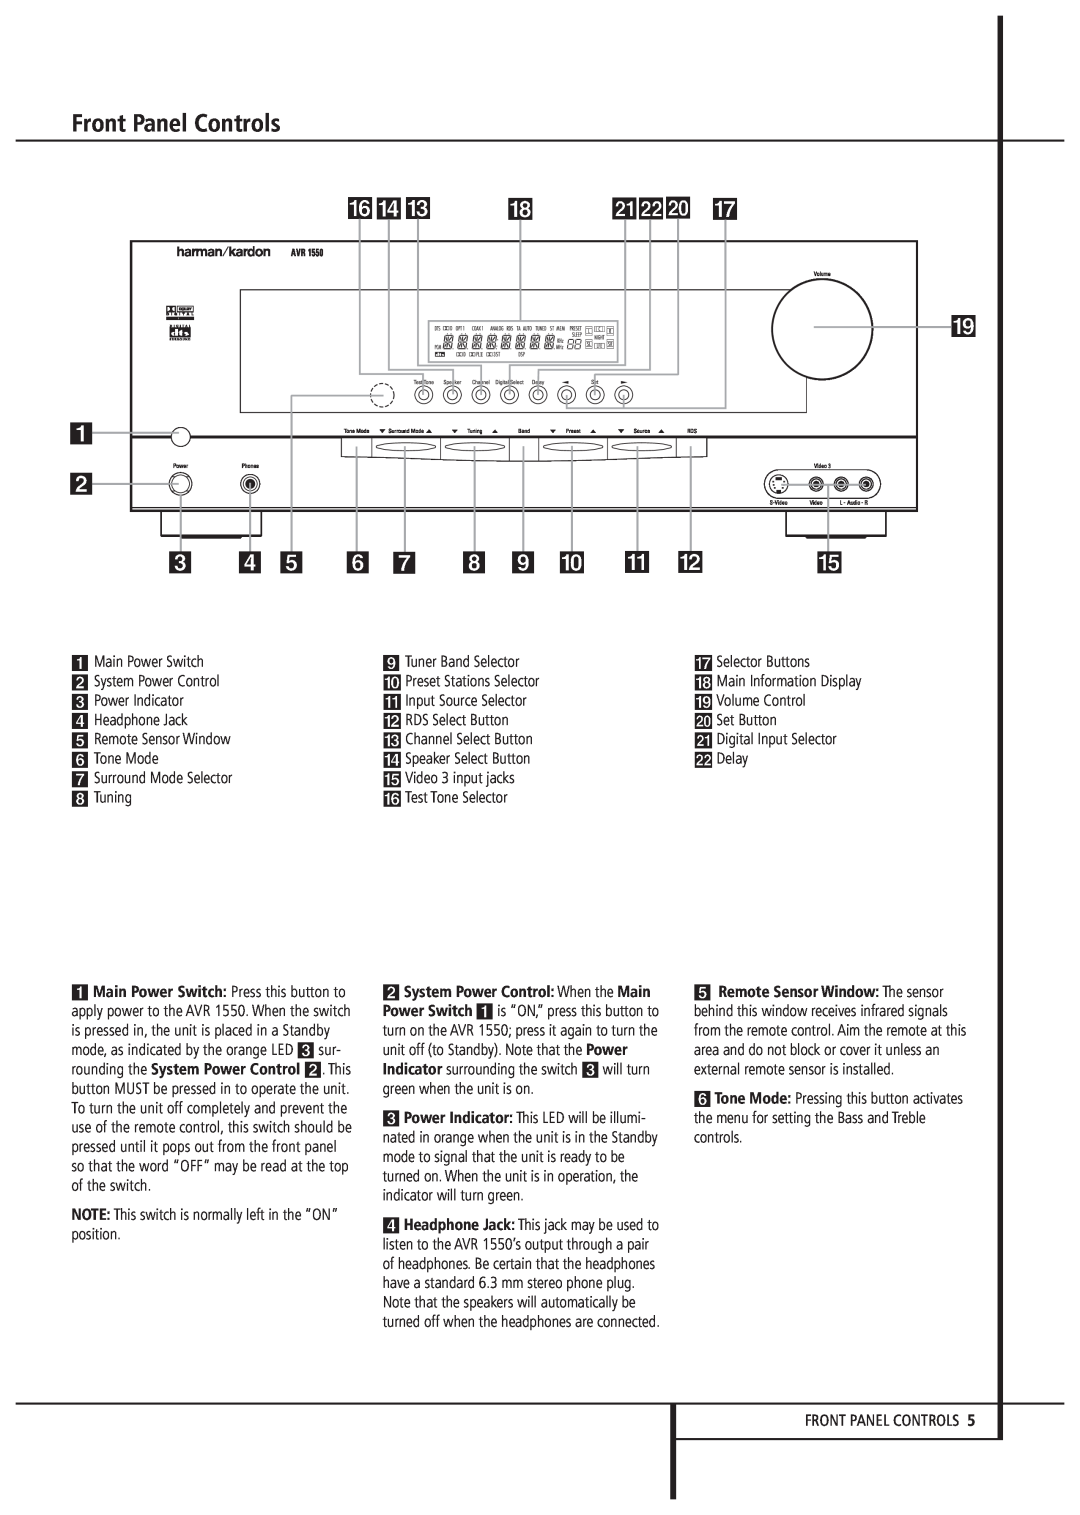 Harman-Kardon AVR1550 owner manual Front Panel Controls, $# * Ôó, 3 4 5 6 7 8 9 ! @ 